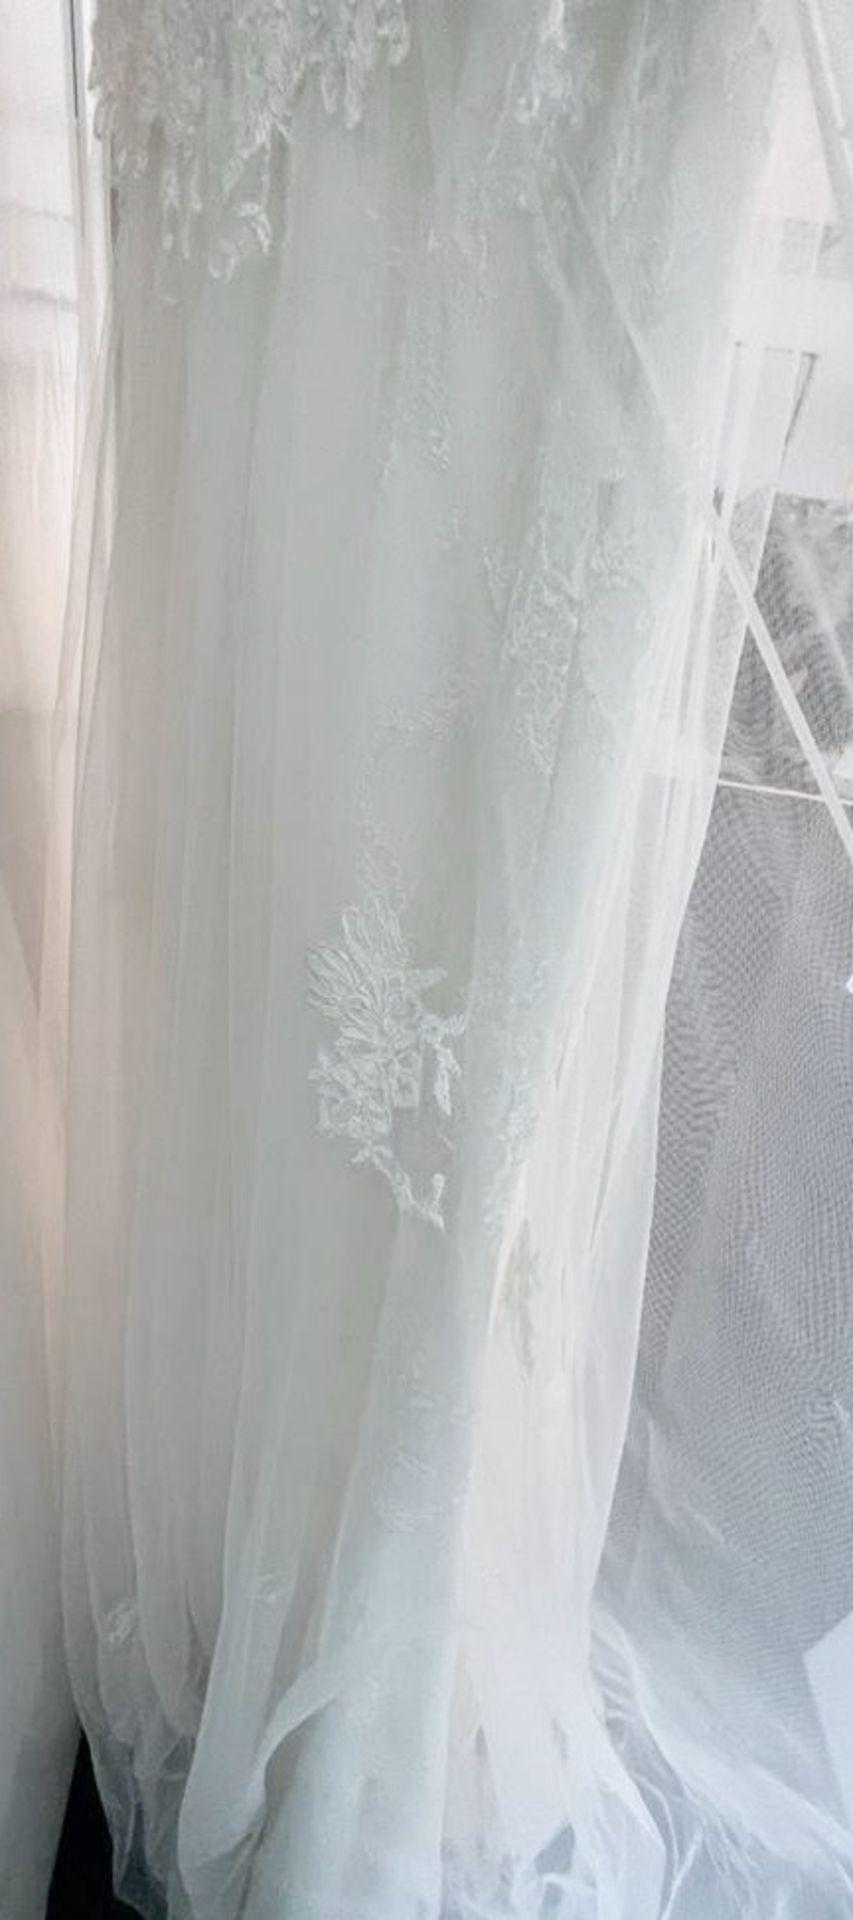 1 x LUSAN MANDONGUS / ANNASUL Y 'Infinity' Strapless Designer Wedding Dress - UK 12 - RRP £1,700 - Image 7 of 8